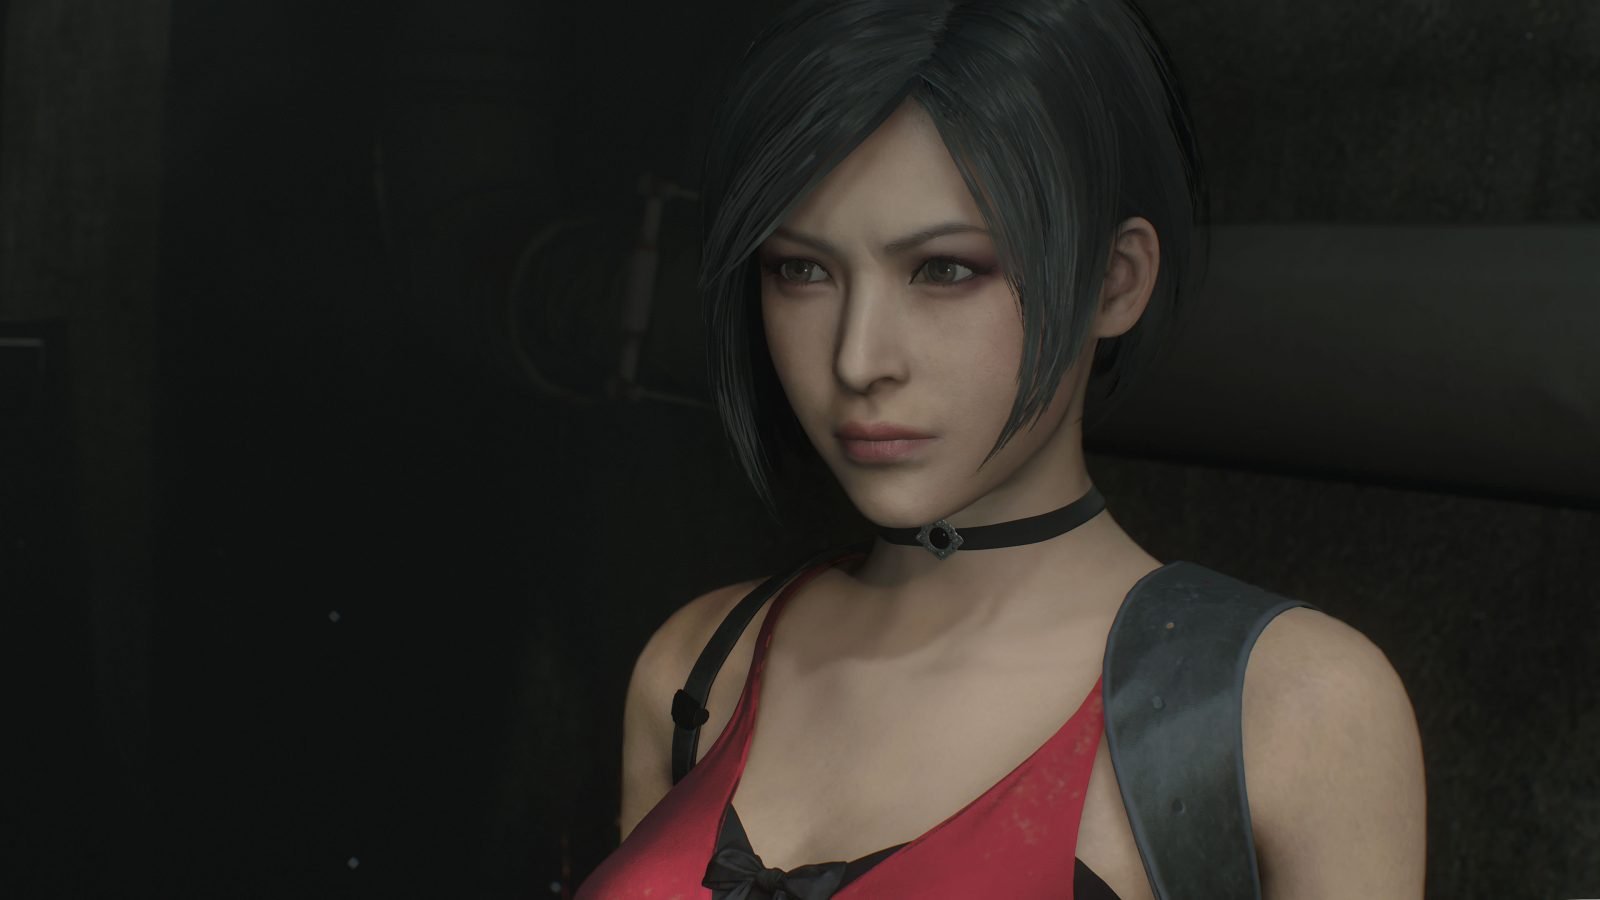 Resident Evil 2 Remake: Ada Wong Look More Seductive !